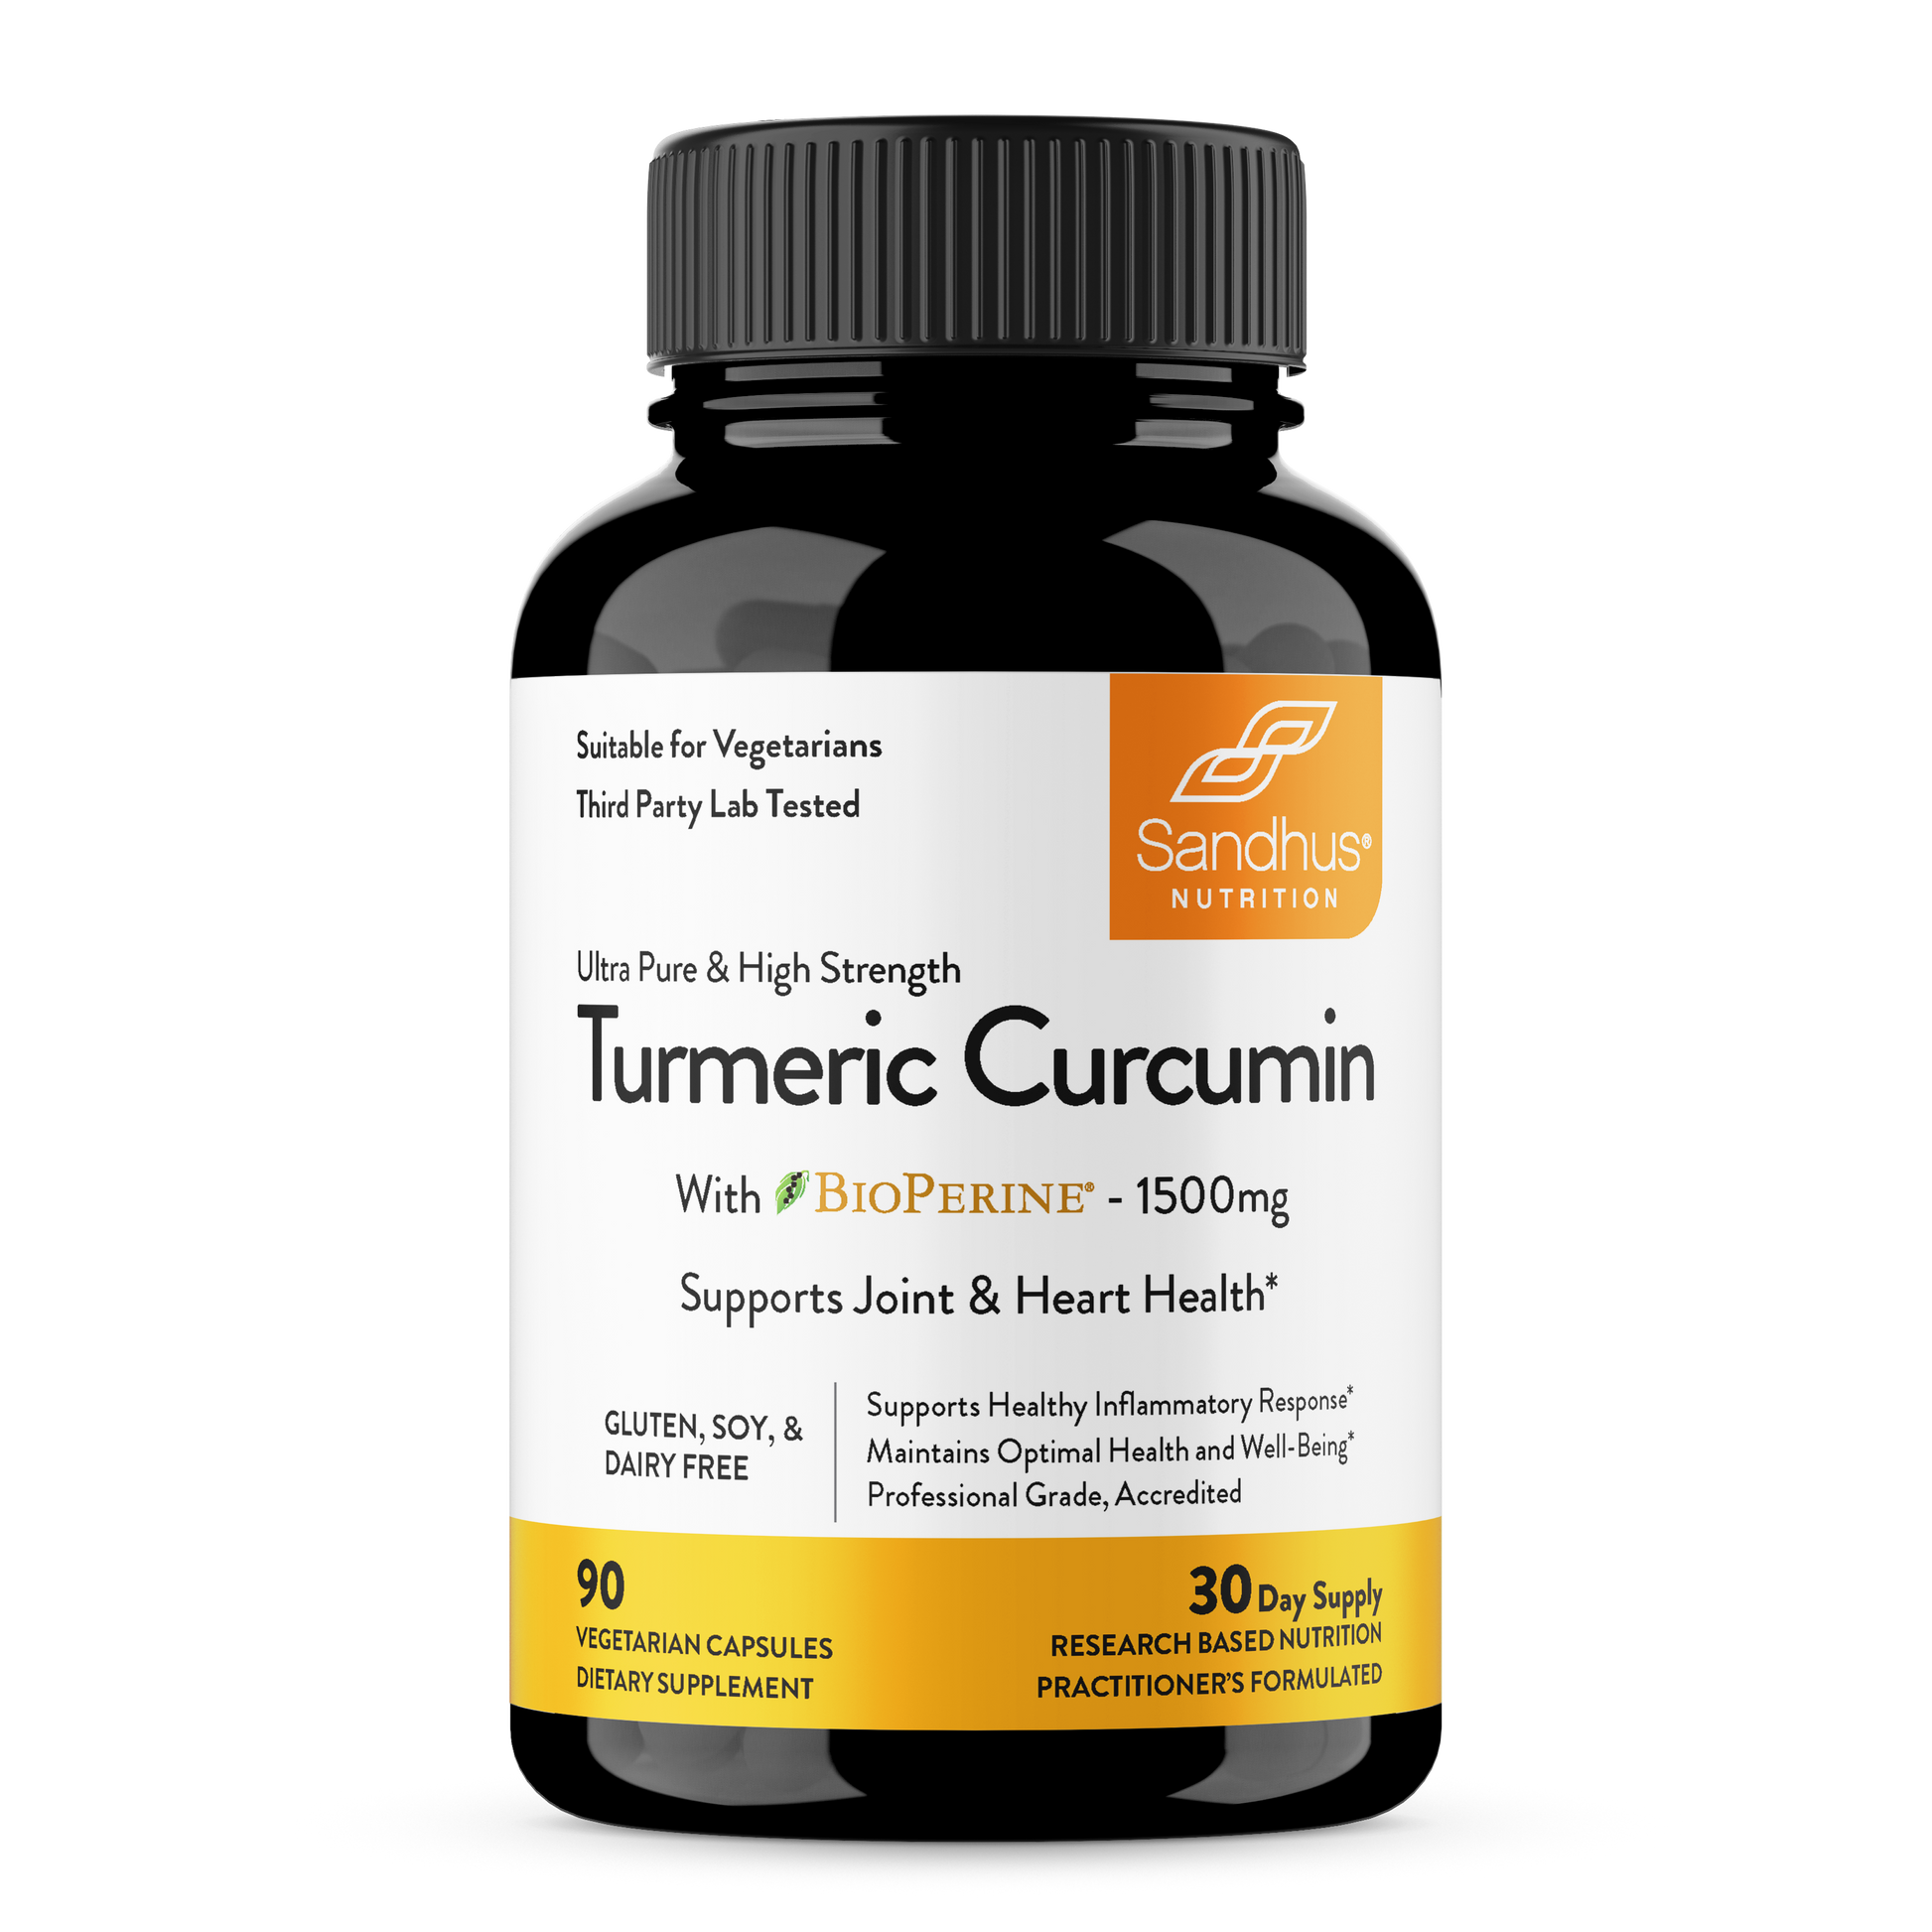 turmeric-curcumin-with-bioperine-1500-mg-best curcumin supplement	best turmeric supplement	best joint supplement	immune support supplement	best antioxidant supplement